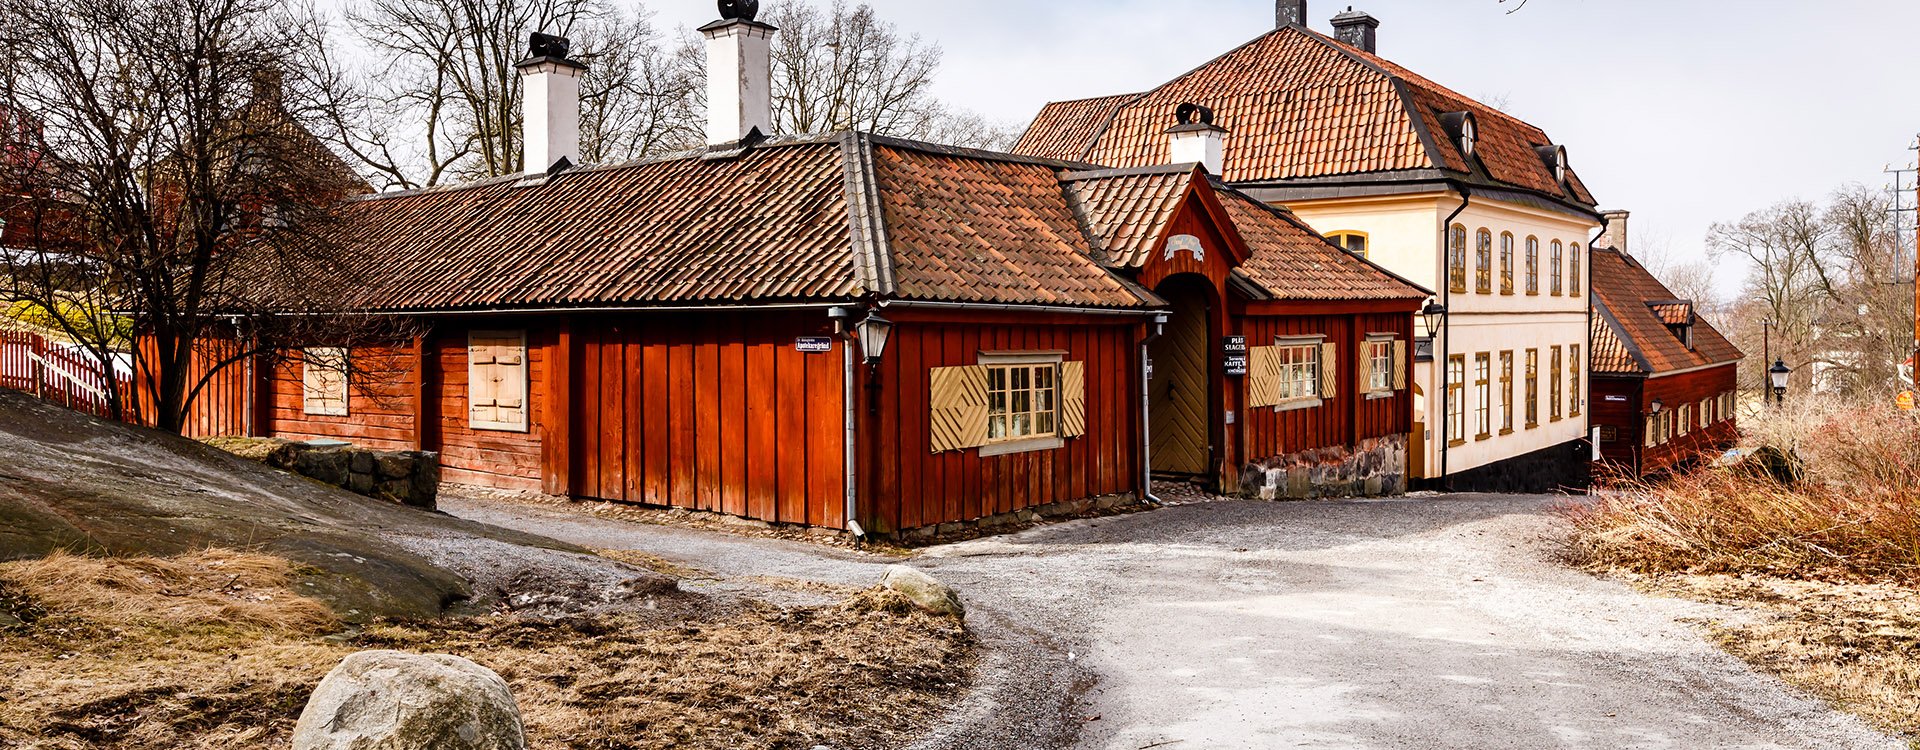 Traditional Swedish Houses in Skansen National Park, Stockholm, Sweden